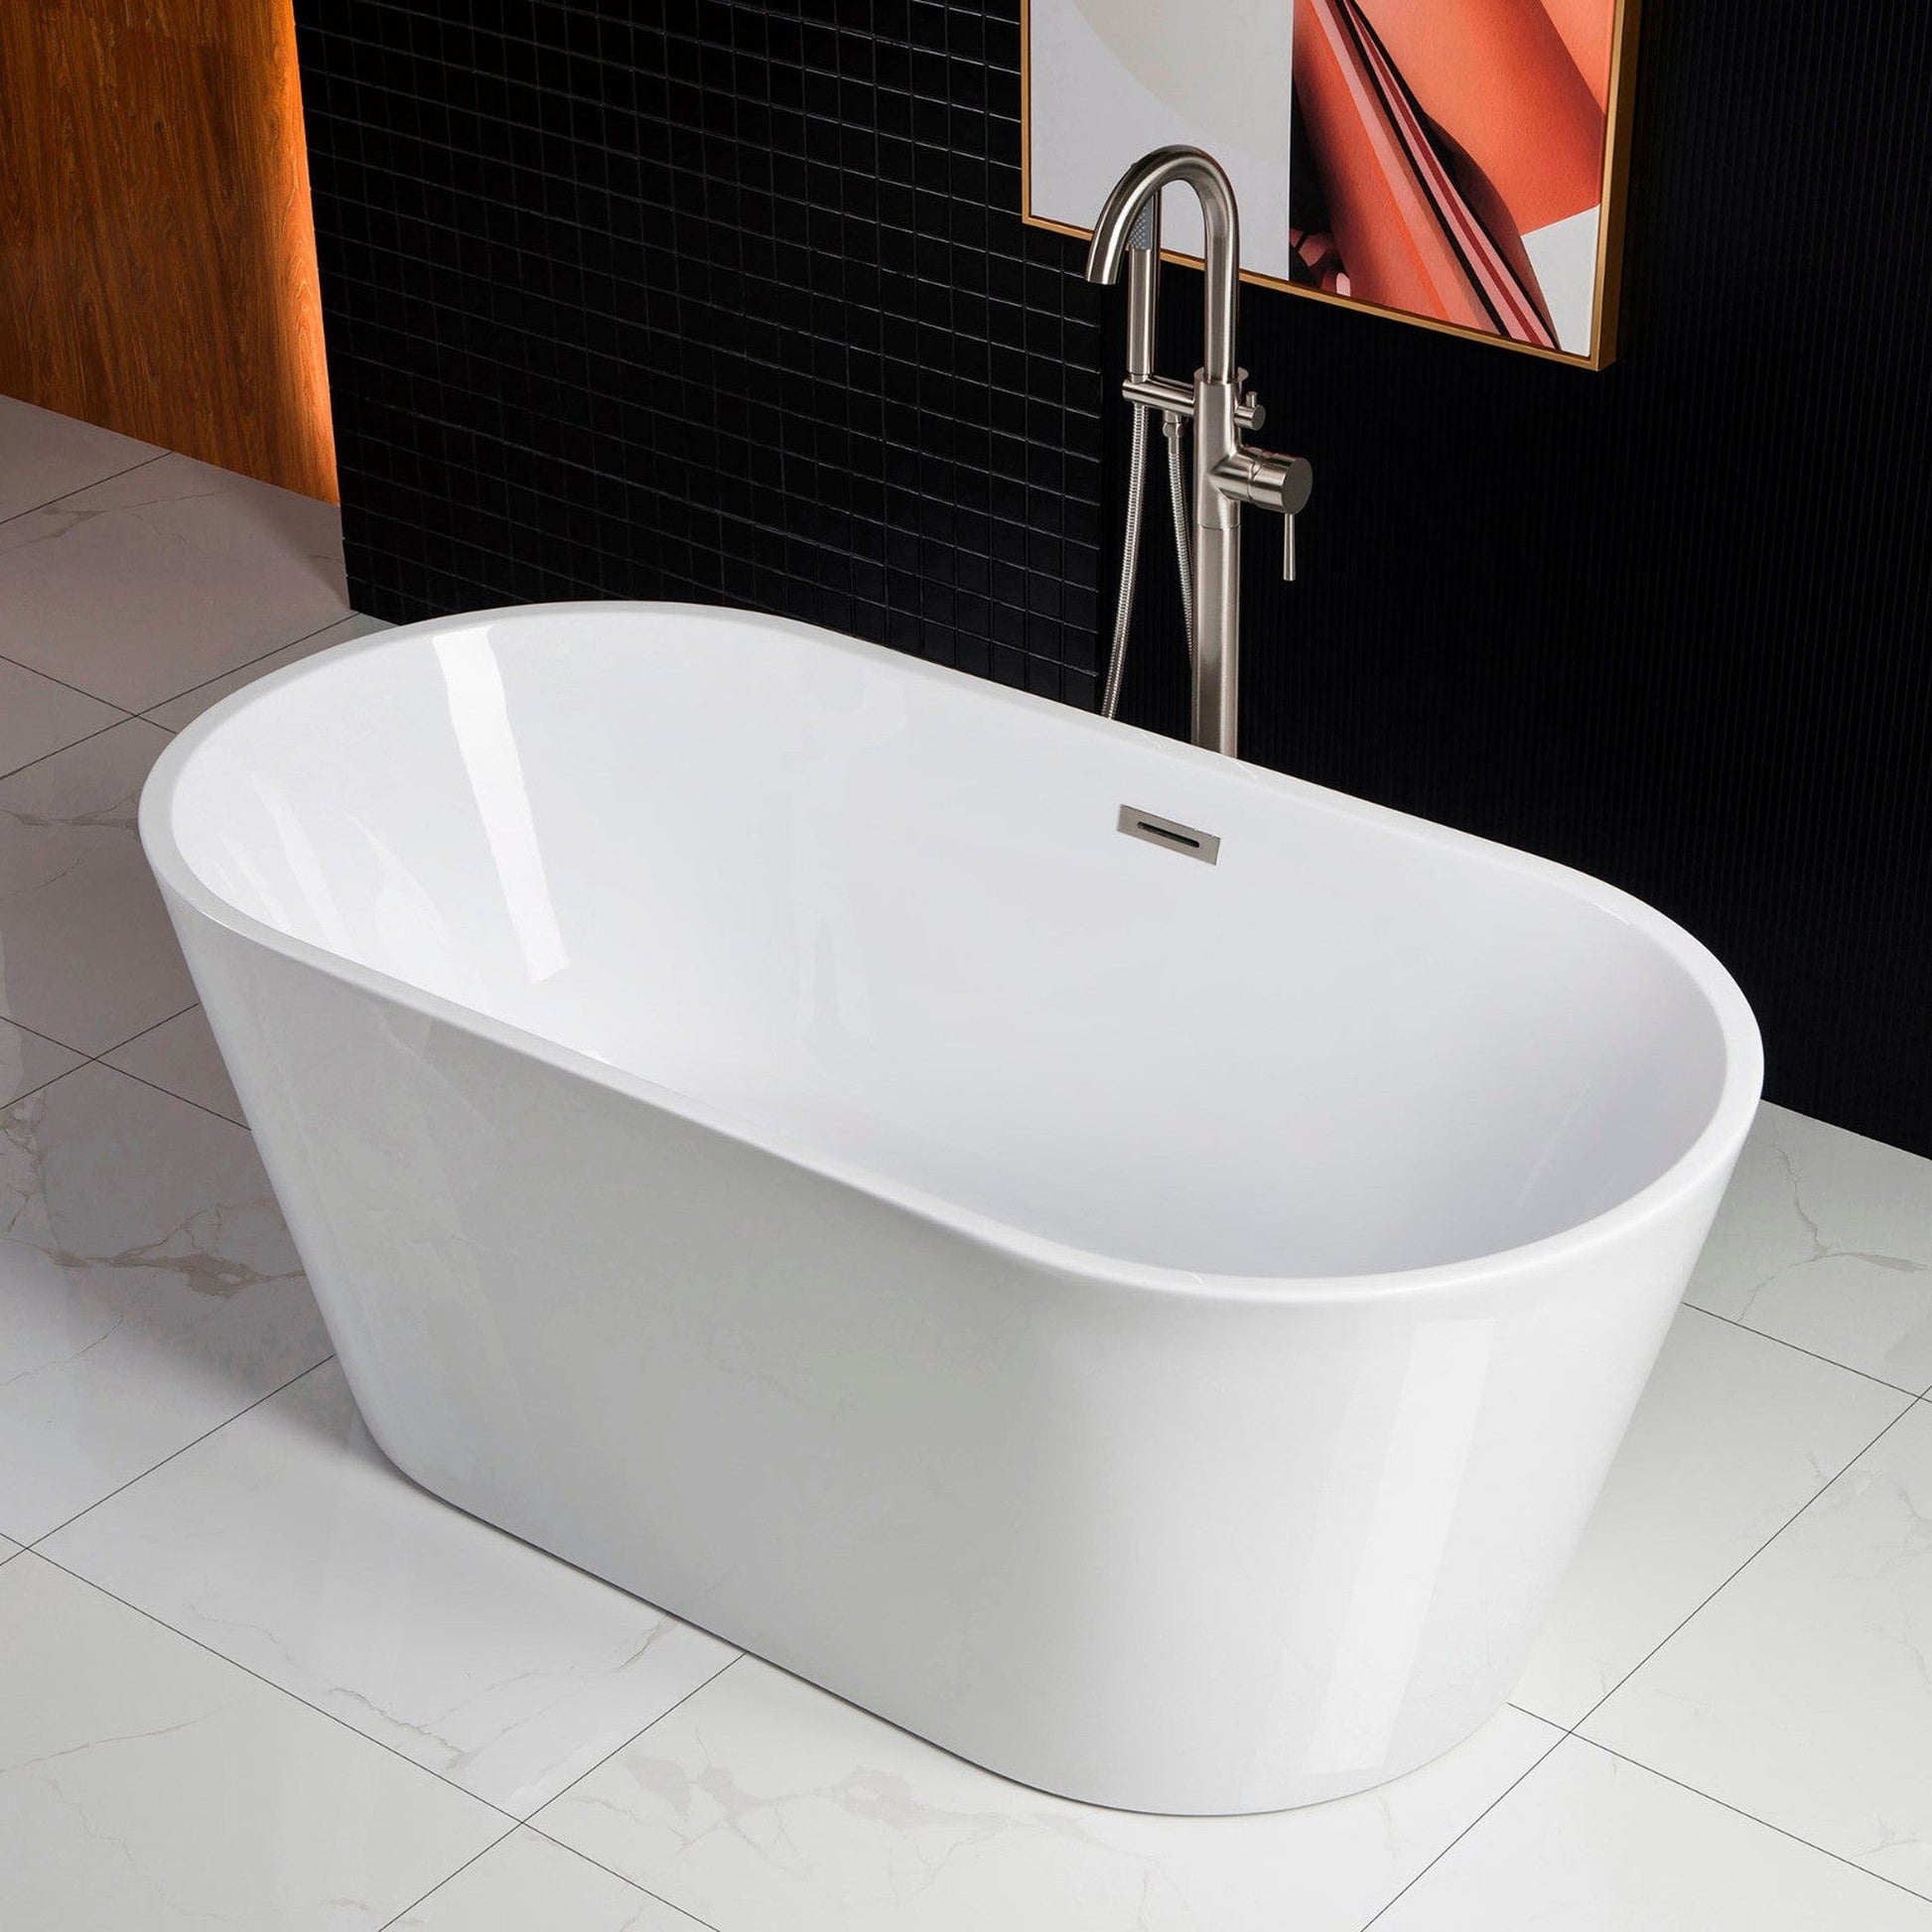 WoodBridge B0014 59" White Acrylic Freestanding Soaking Bathtub With Chrome Drain, Overflow, F0071CHRD Tub Filler and Caddy Tray